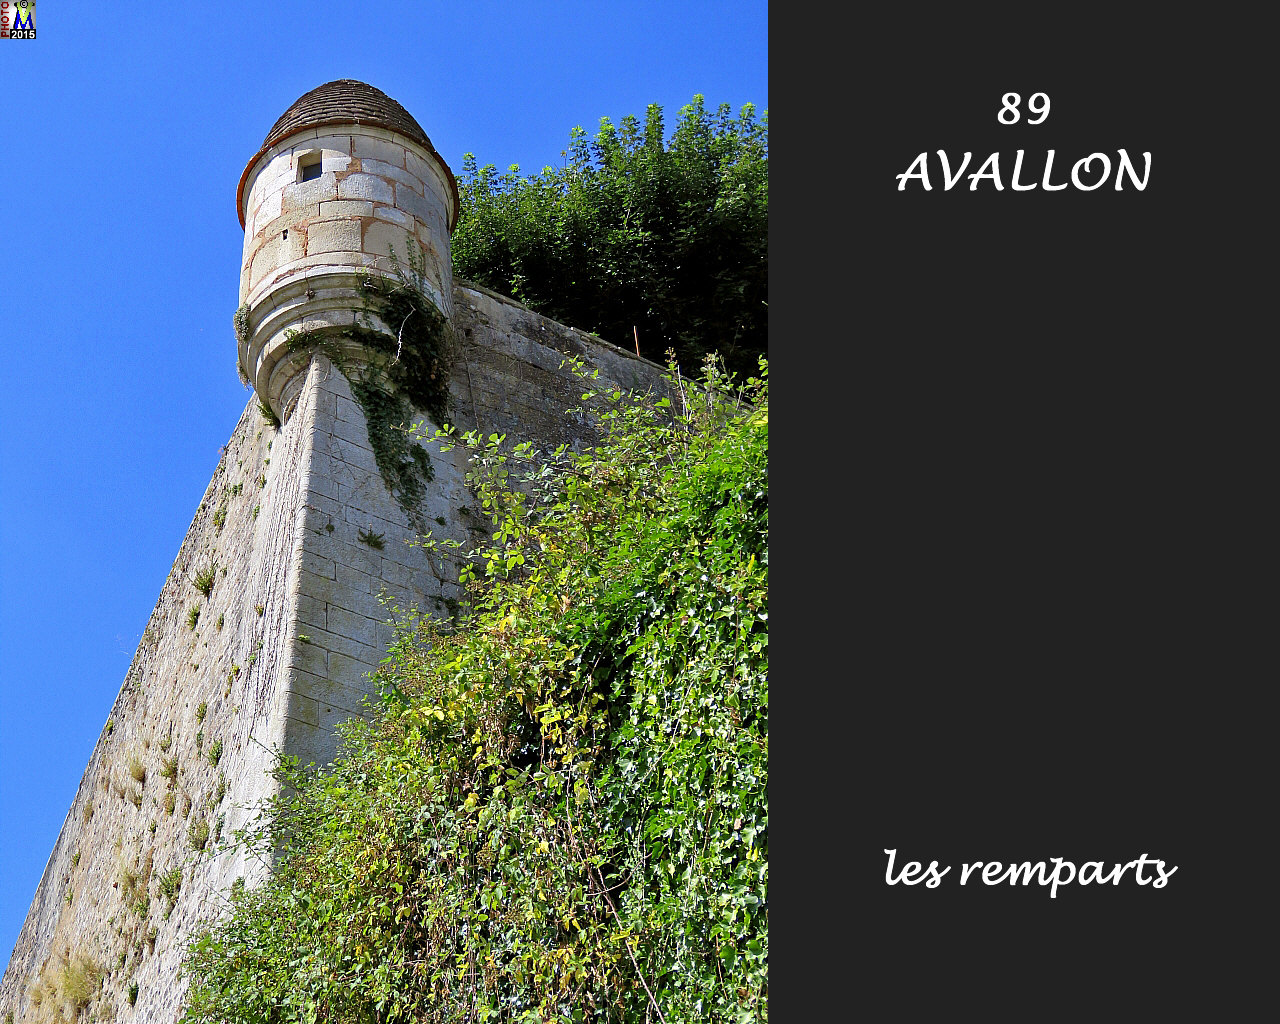 89AVALLON-remparts_100.jpg